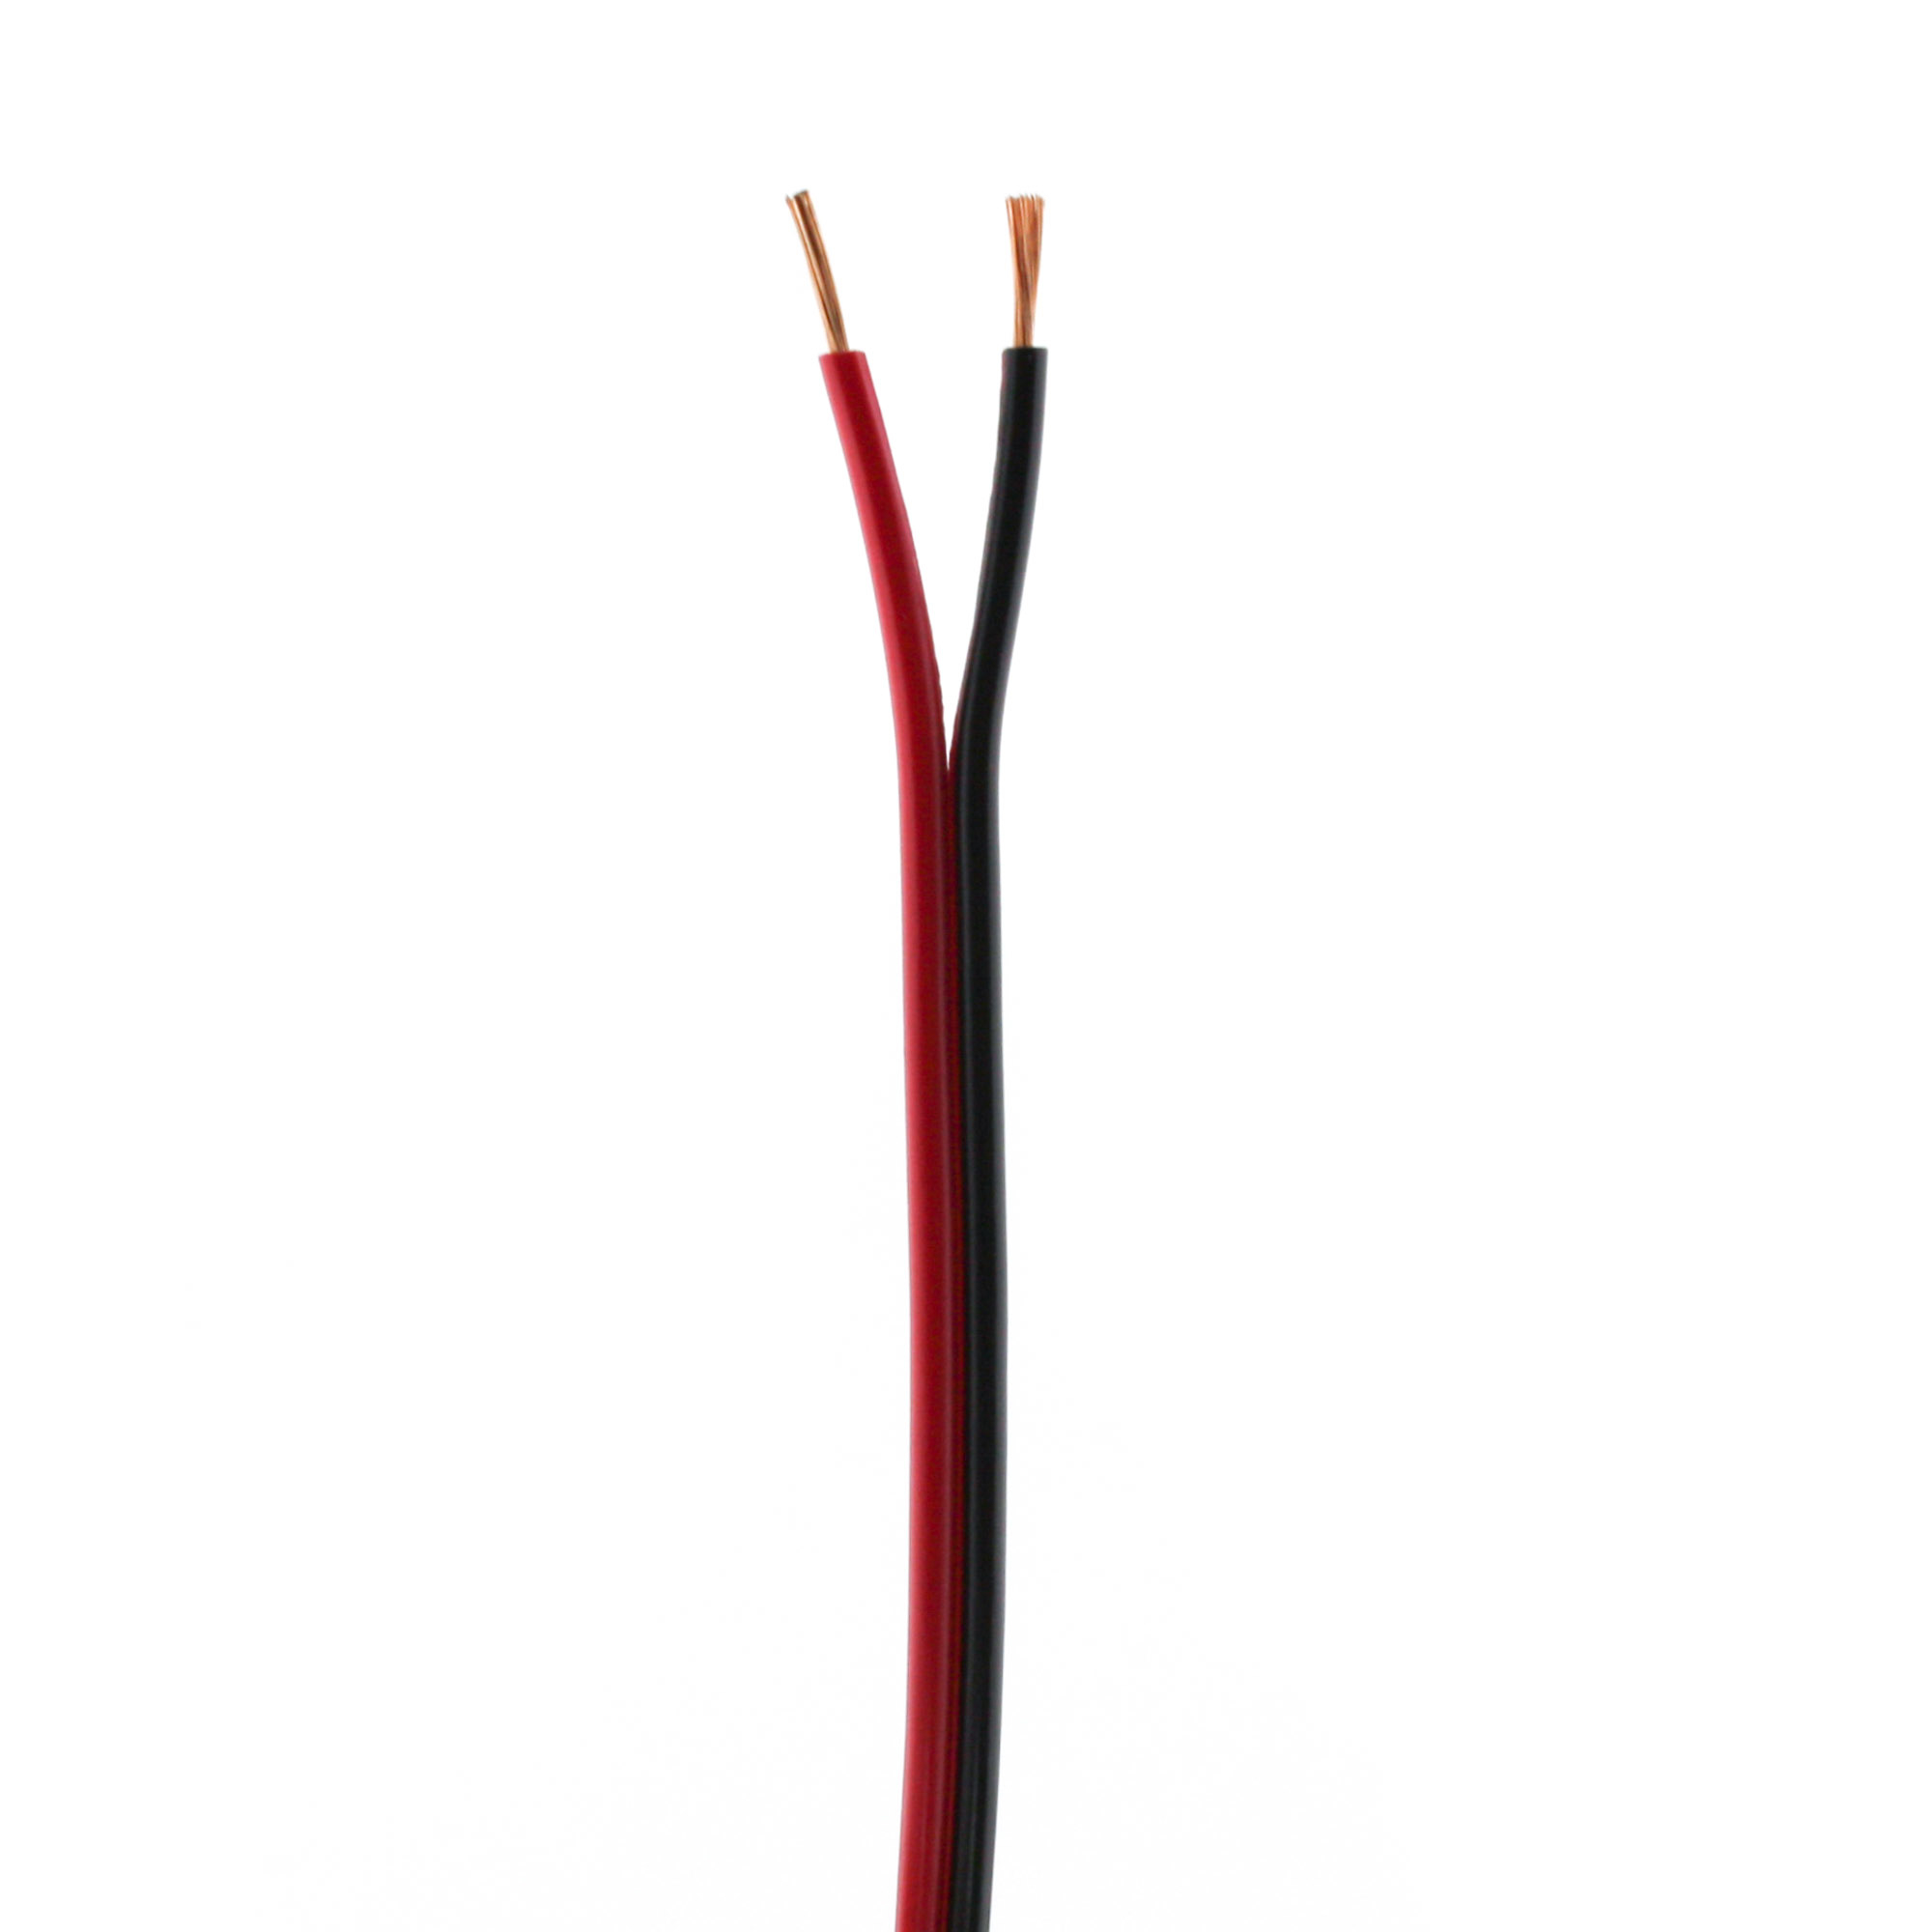 Lautsprecherkabel rot/schwarz 25m 0,75mm